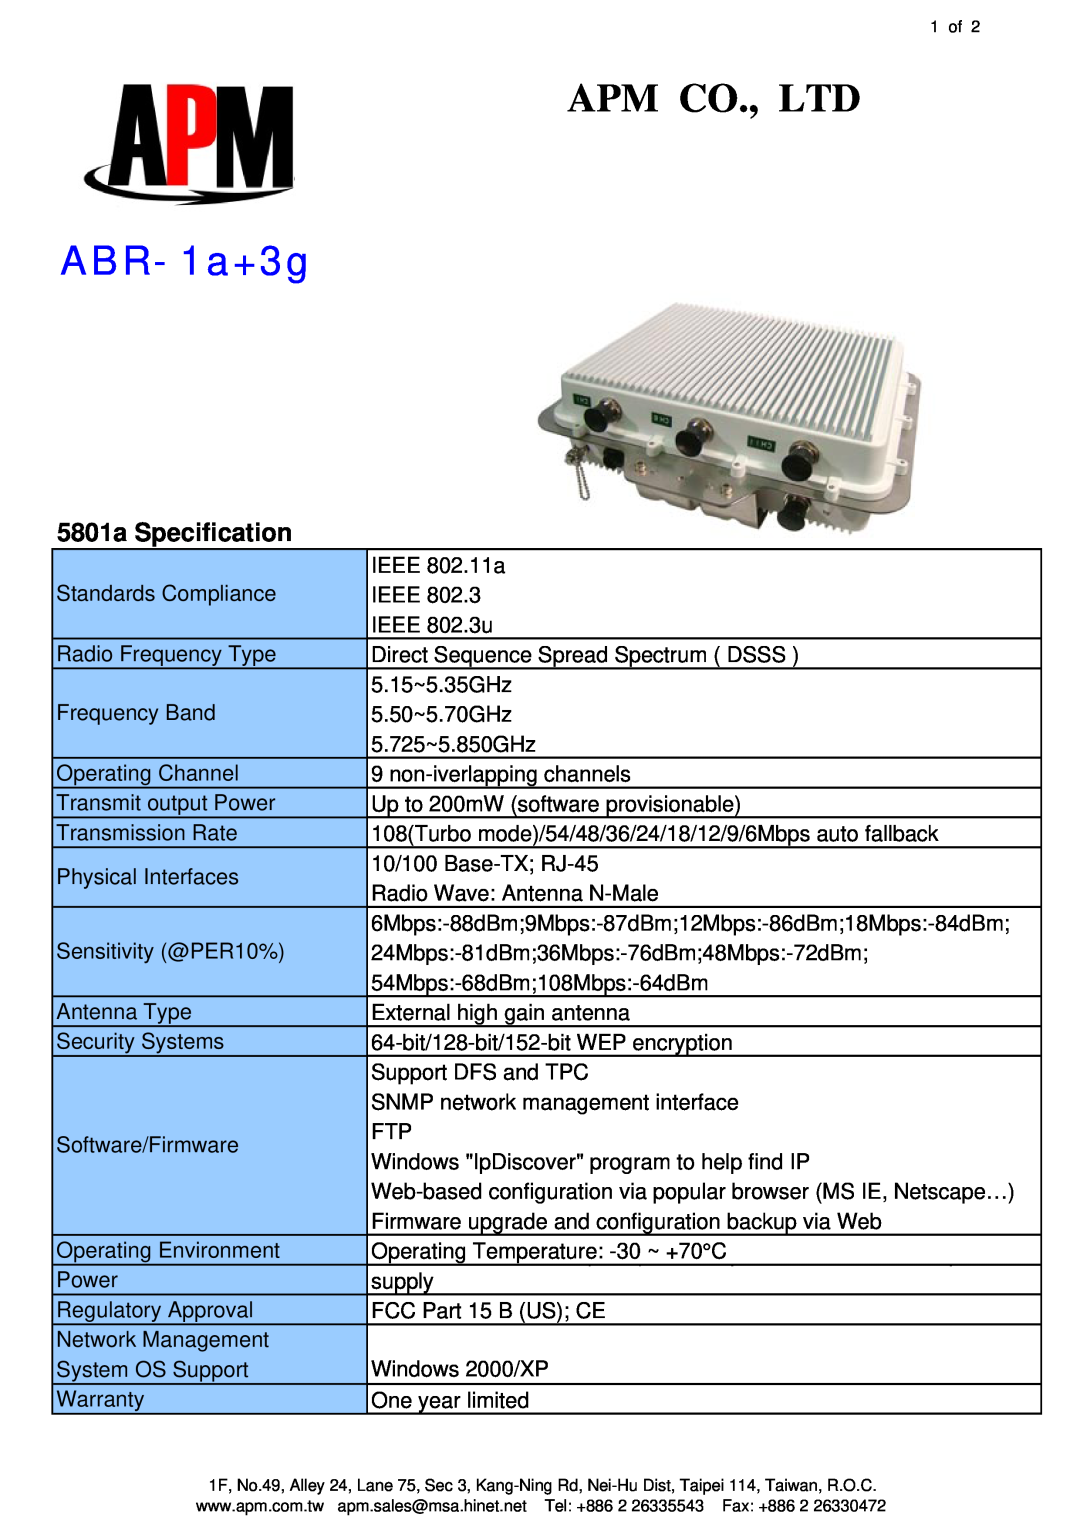 APM ABR-1A+3G warranty ABR- 1a+3g, 5801a Specification 